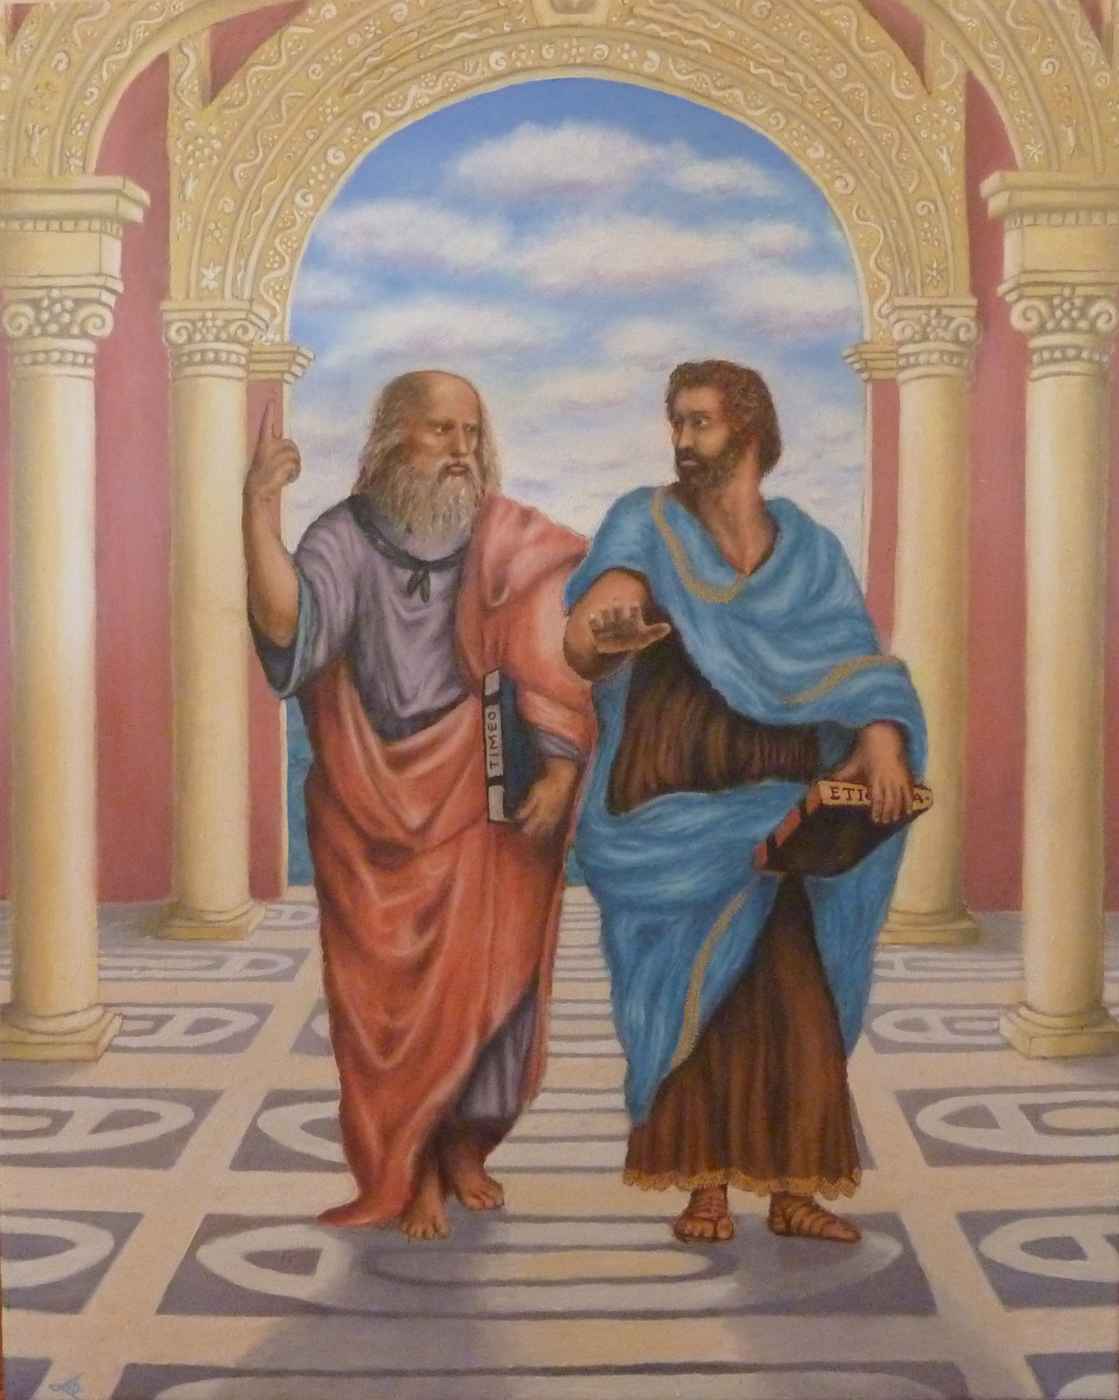 Plato Aristotle ala Raphael large